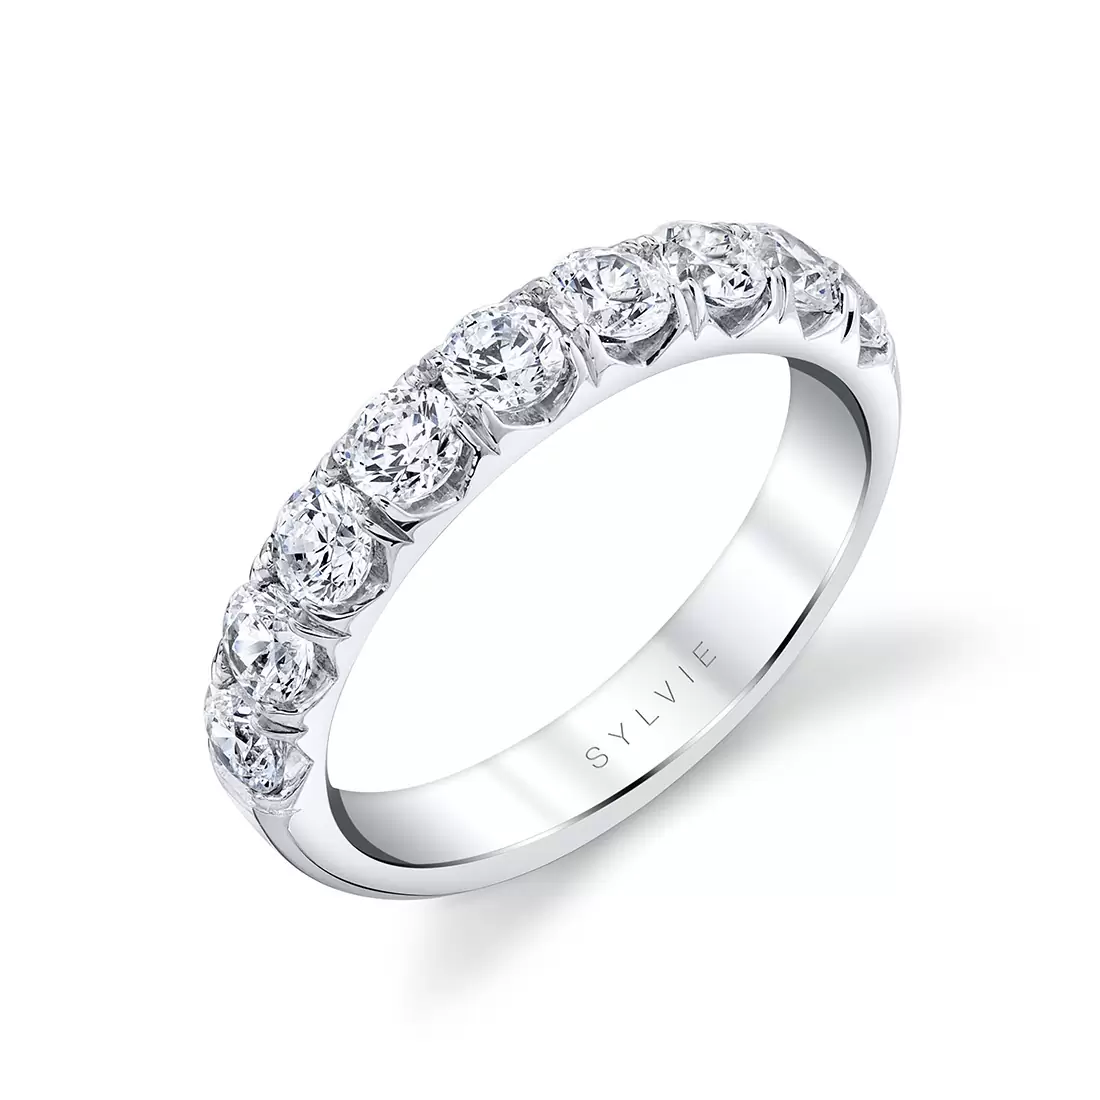 White gold thick classic diamond wedding ring